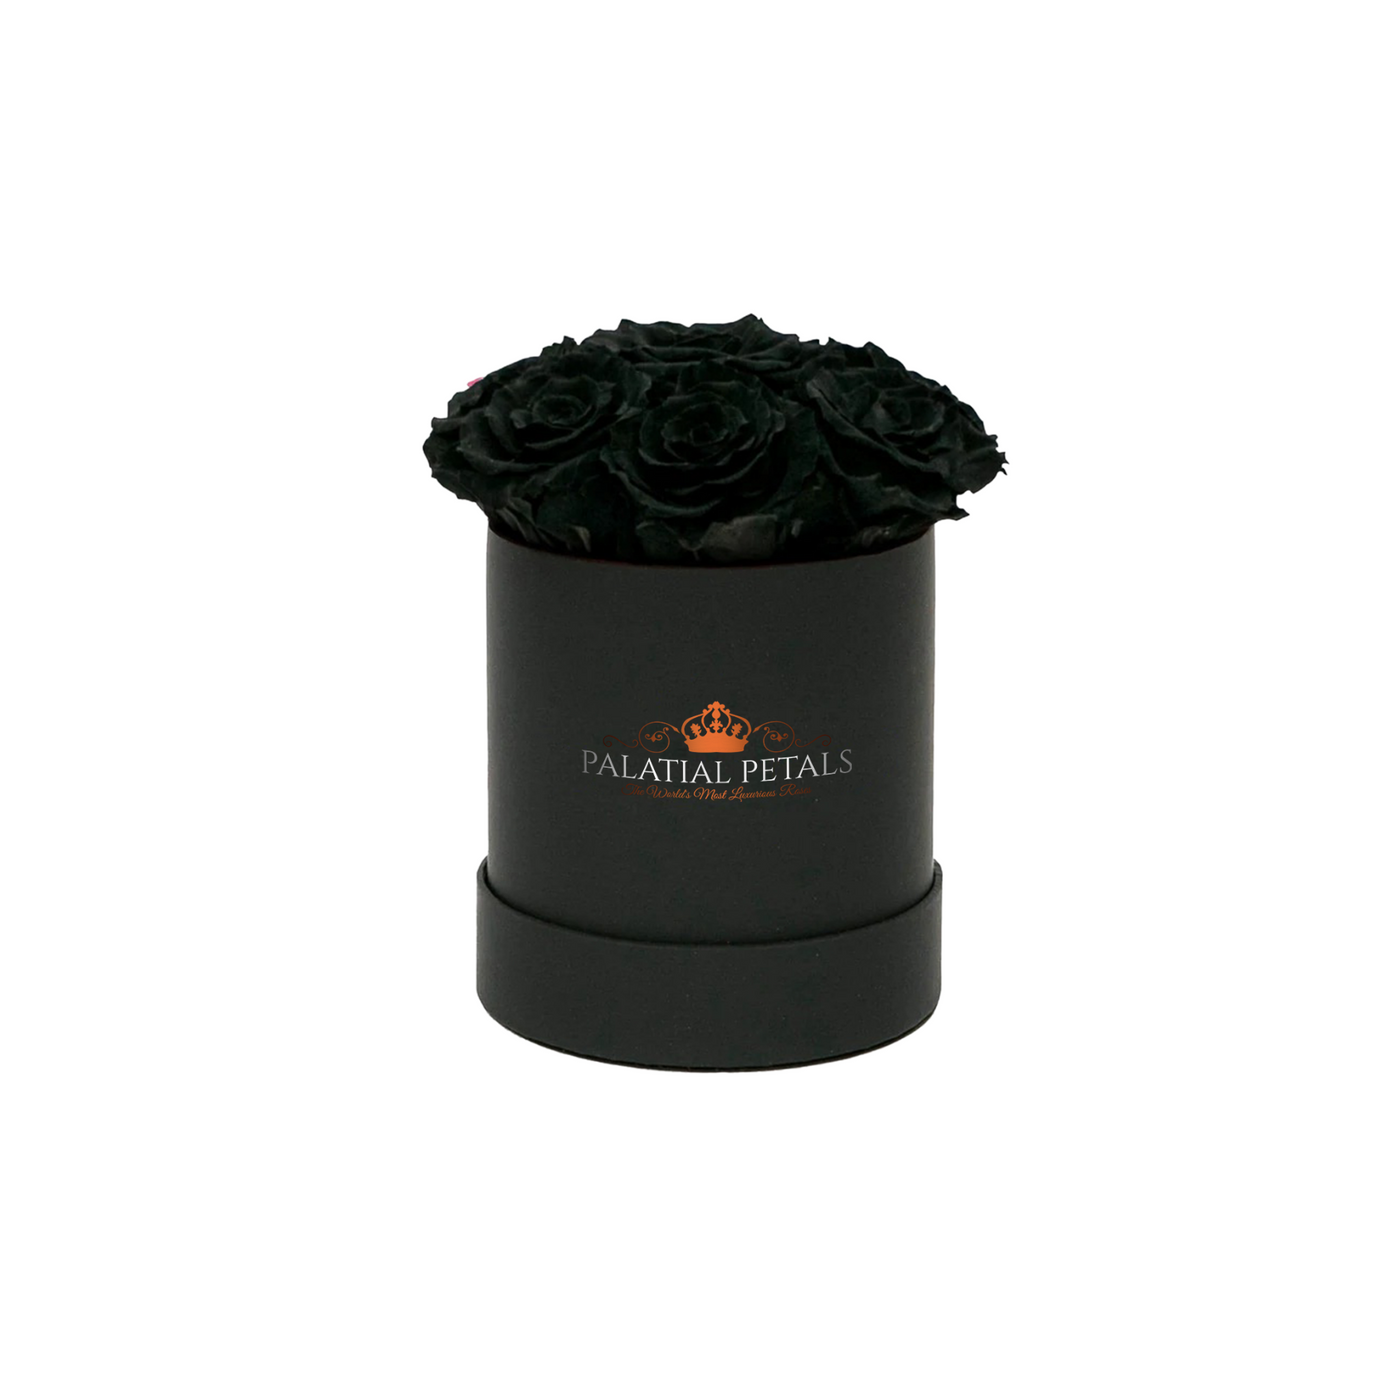 Black Roses That Last A Year - Petite Rose Box